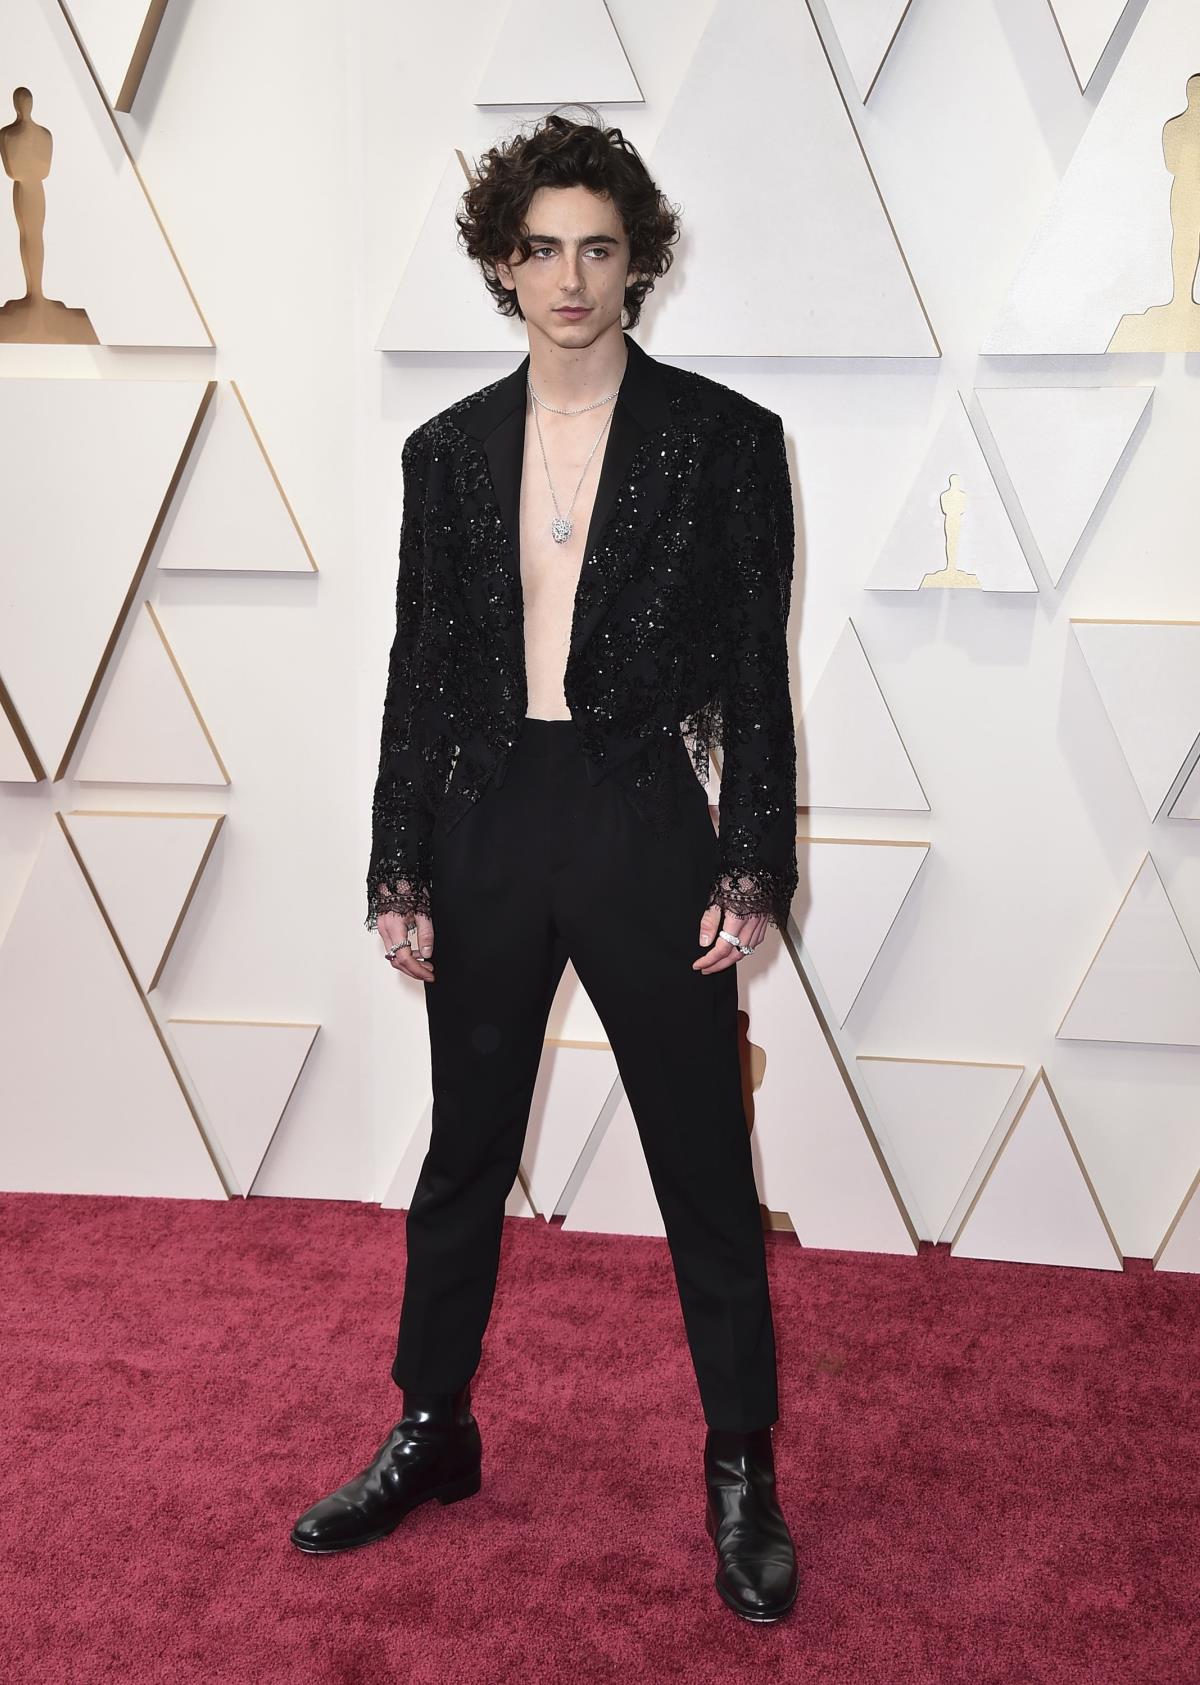 Timothée Chalamet, Kristen Stewart Oscars Red Carpet Looks